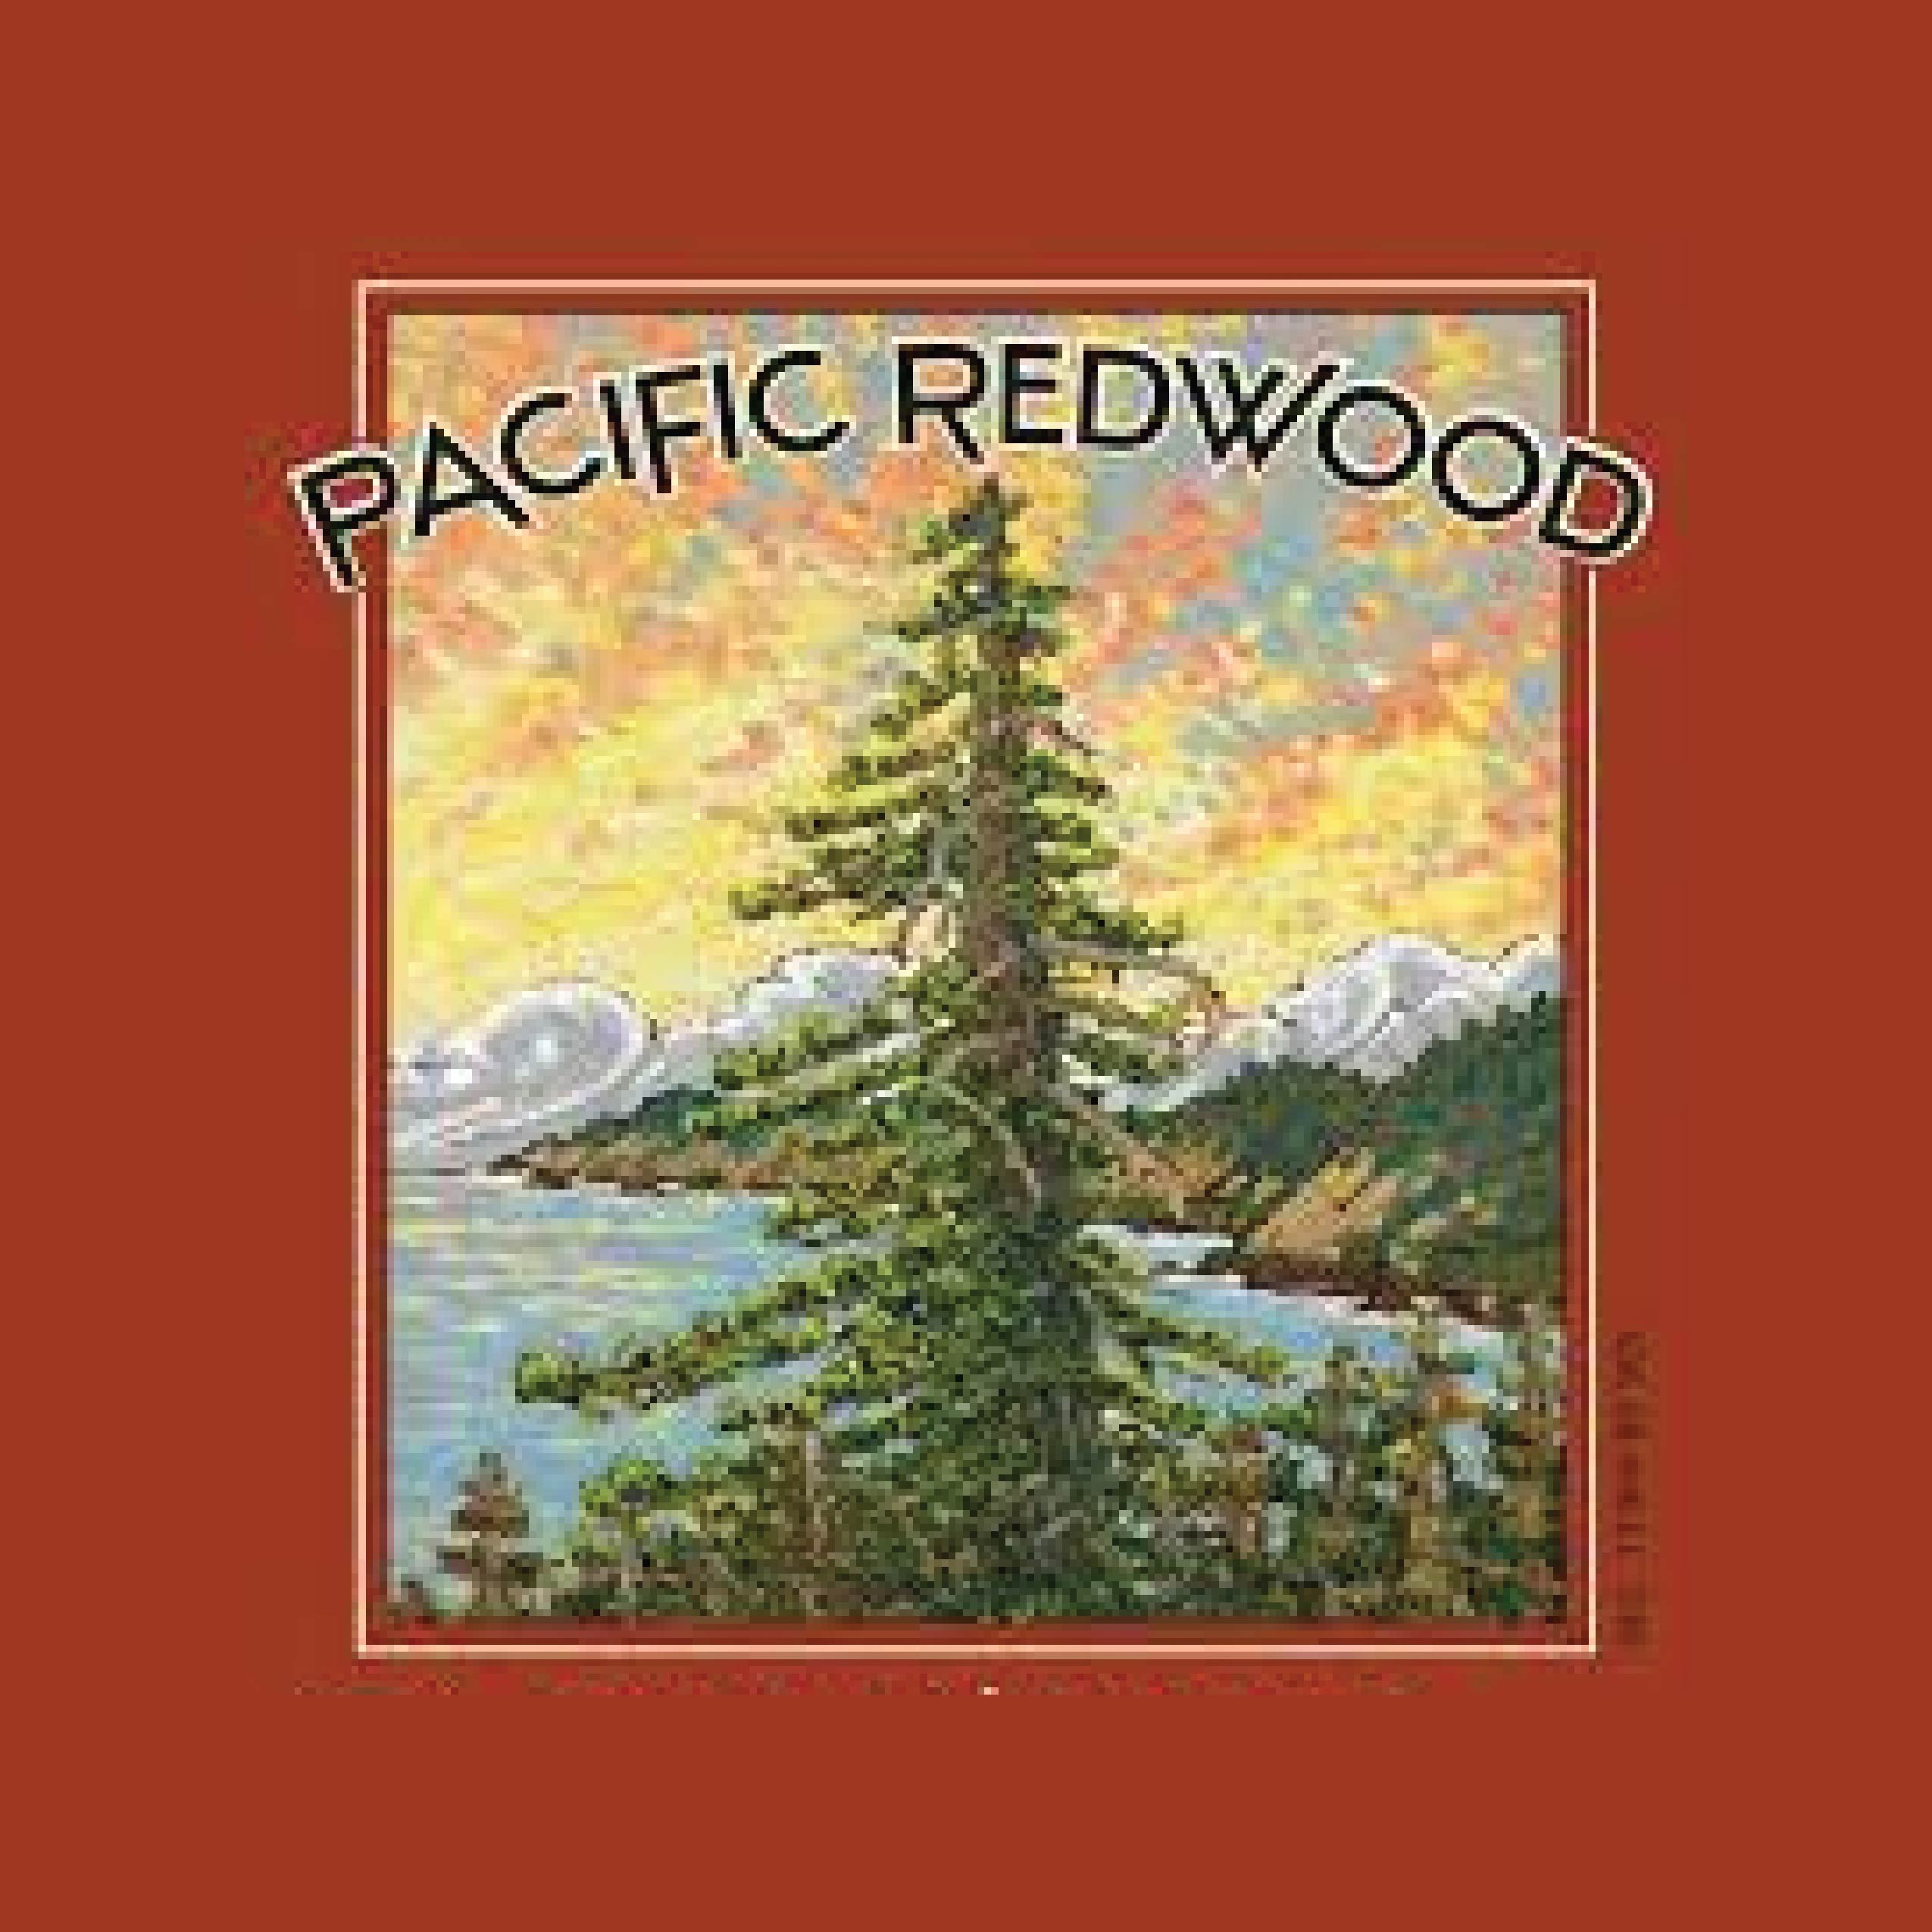 Pacific Redwood Wines